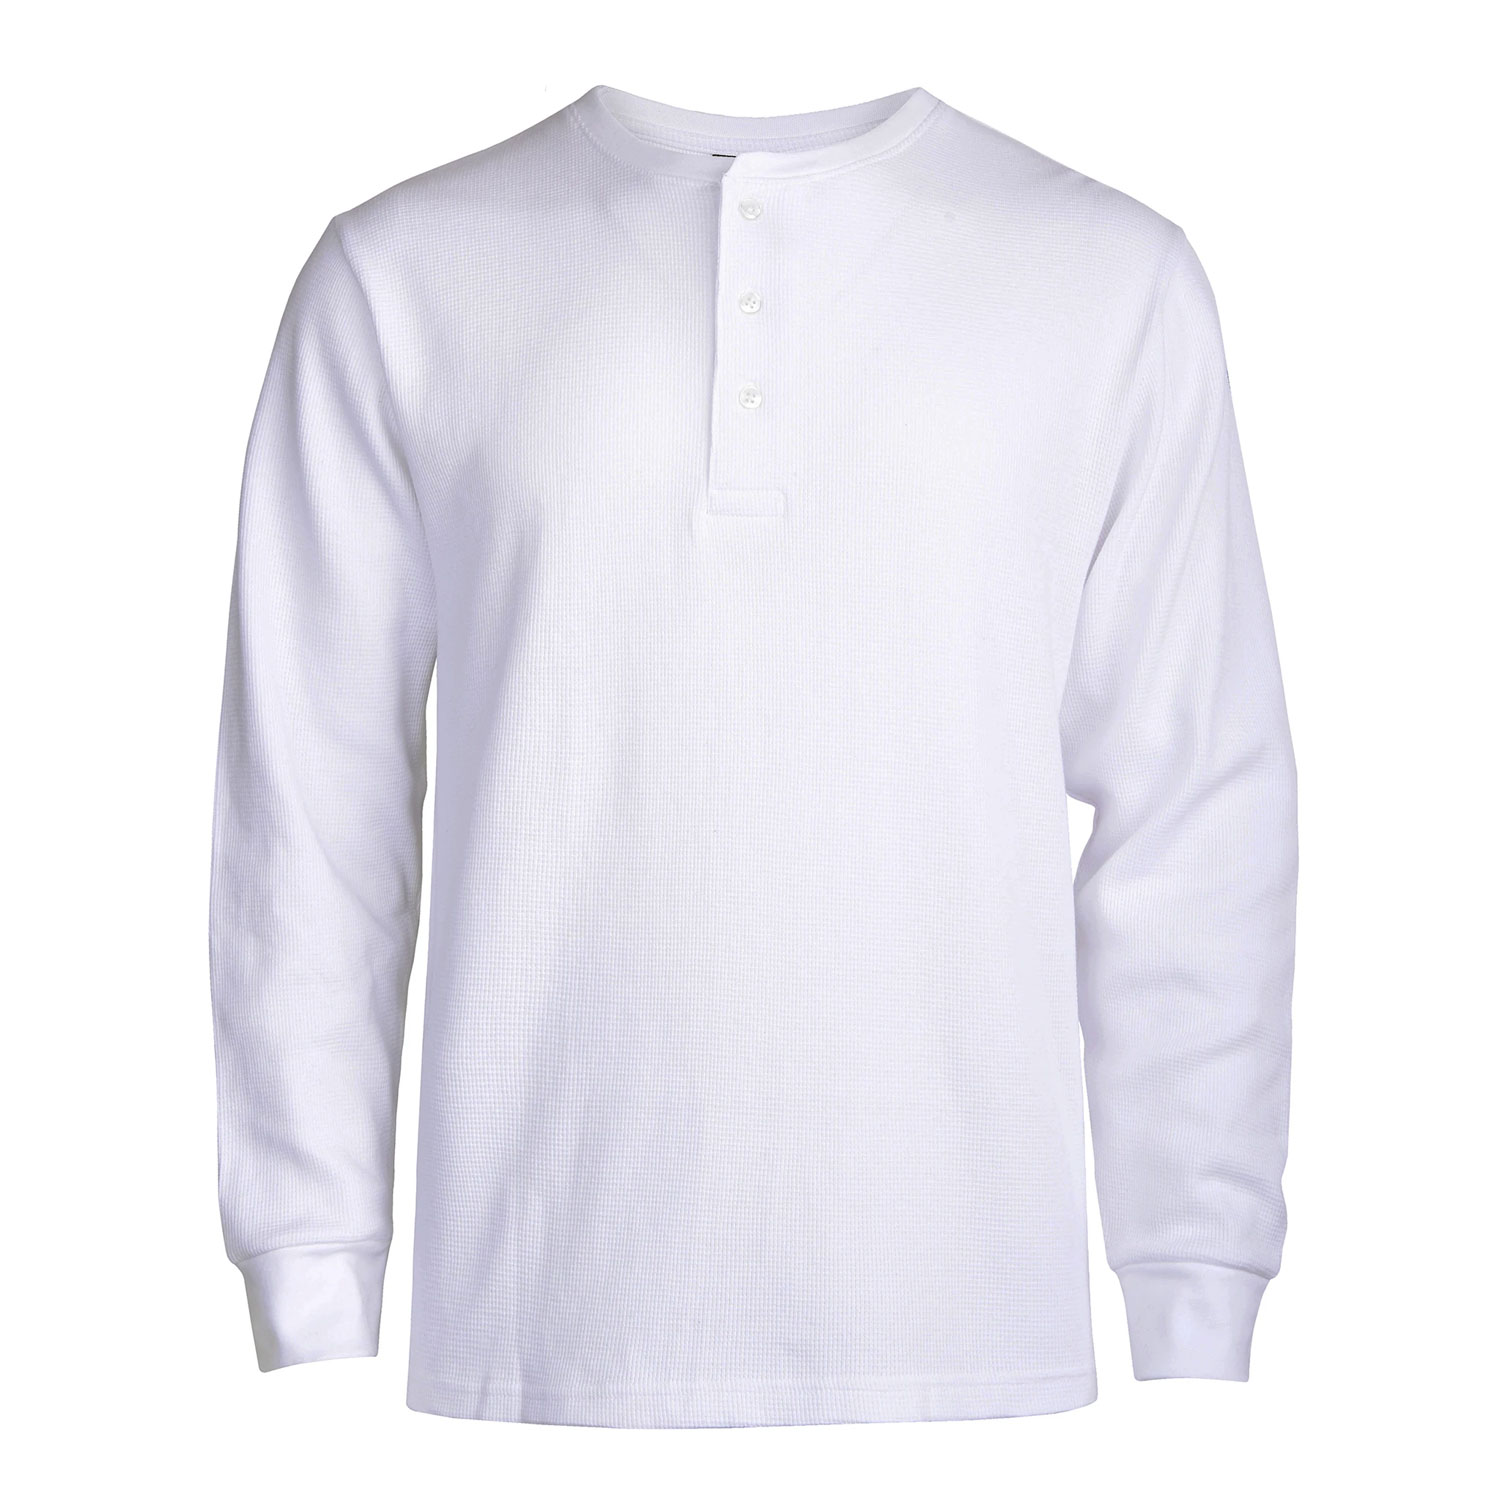 Men's Waffle Knit Thermal Henley Shirt